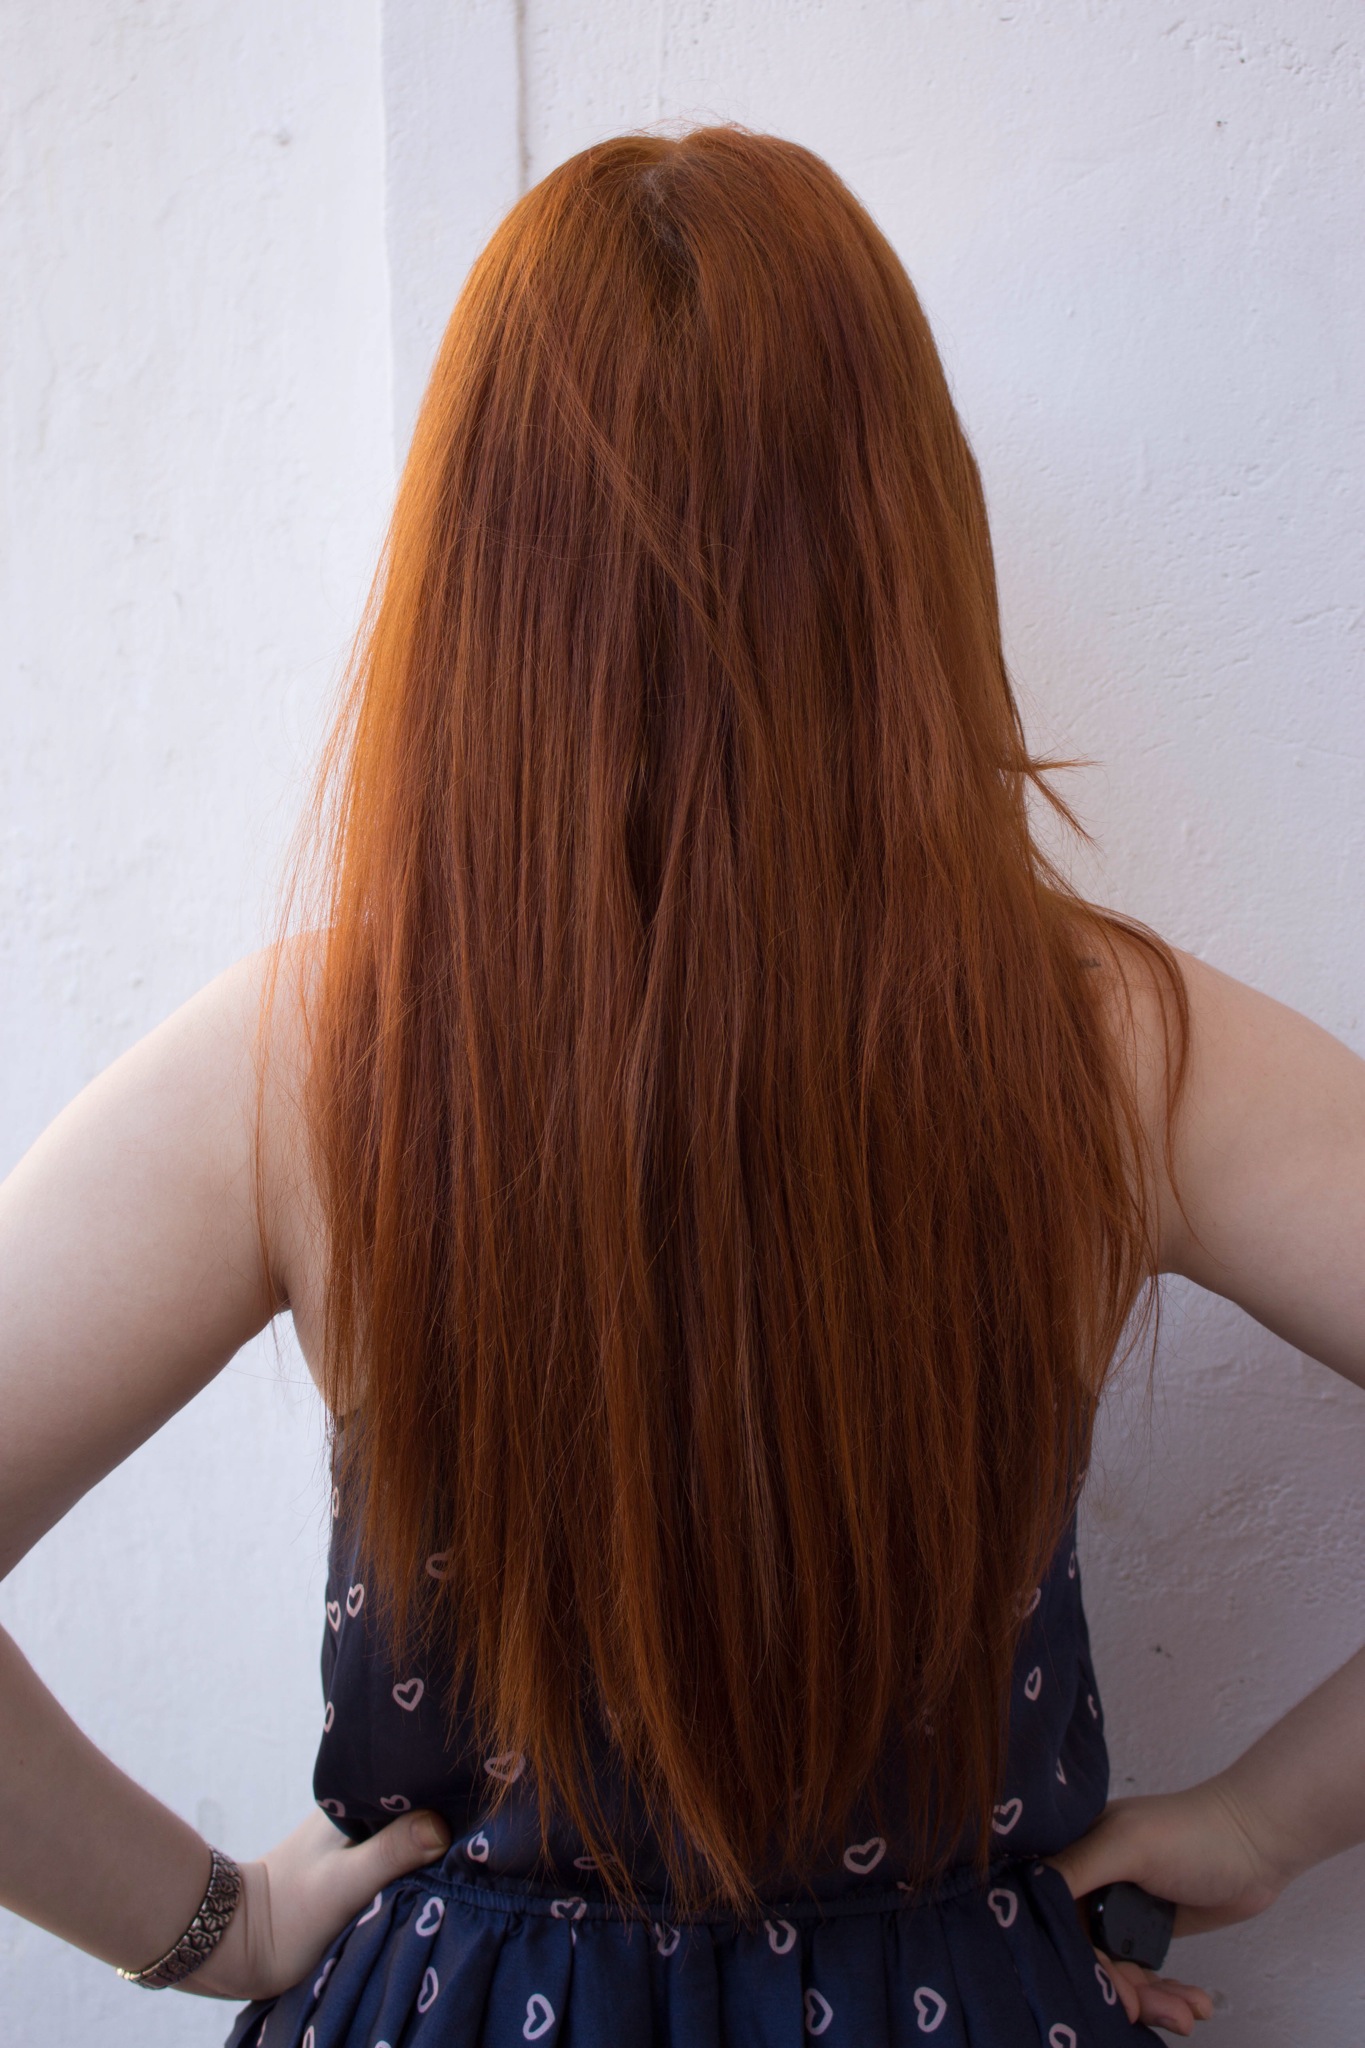 Tinta Igora 8.77 + 9.7  Pretty redhead, Dark red hair, Instagram photo